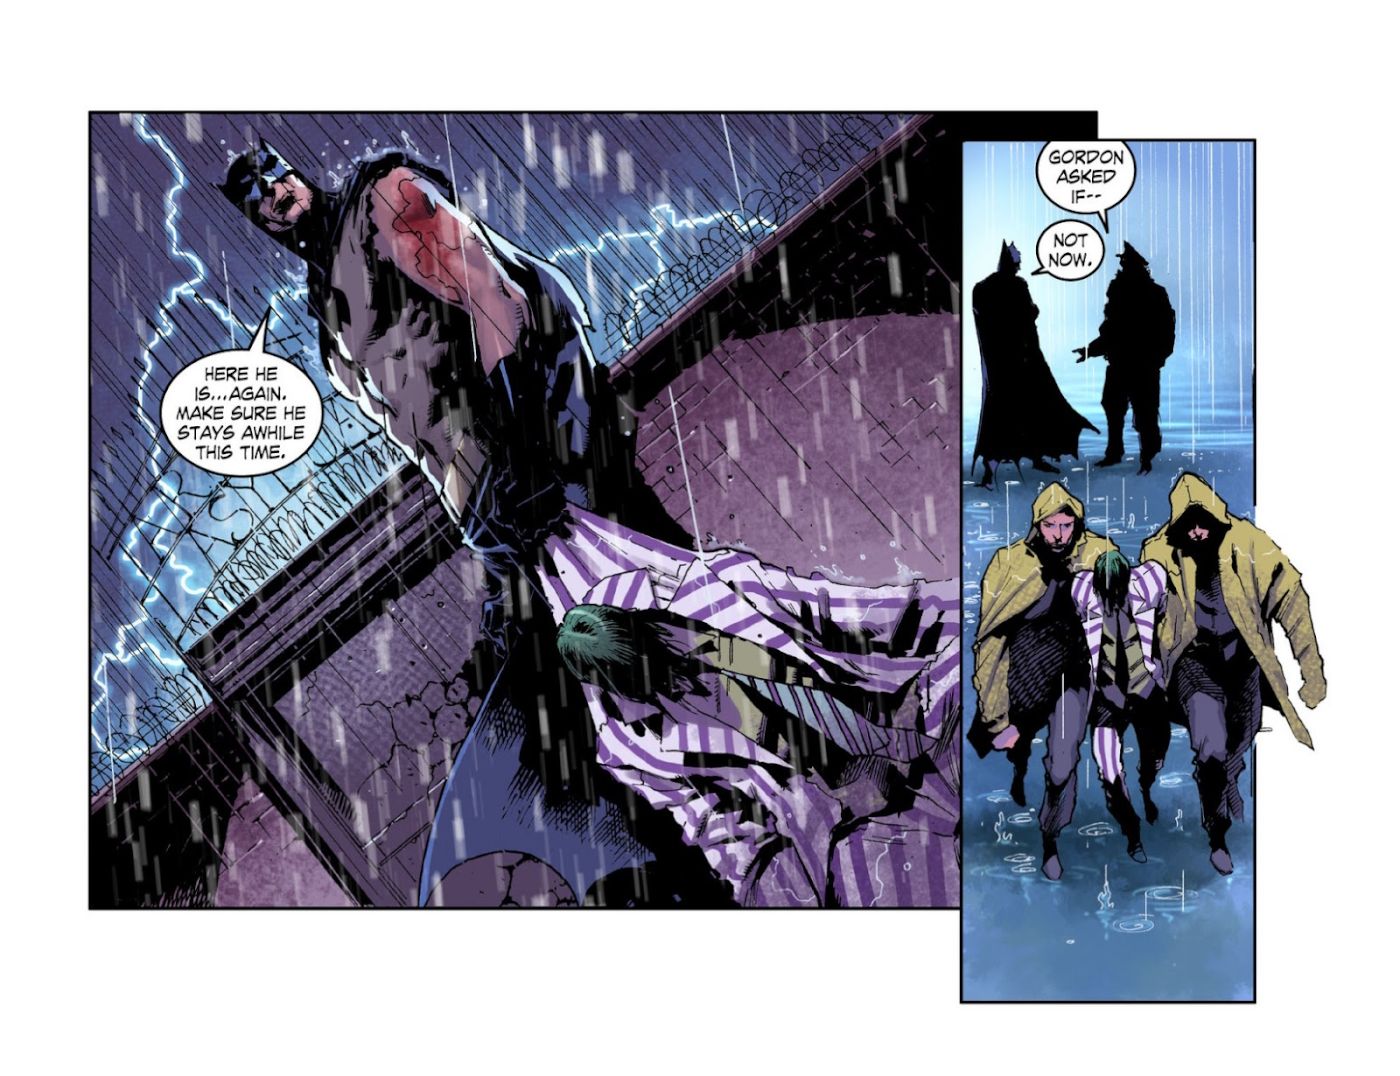 Comic book panels: Batman Captures The Joker And Brings Him To Arkham Asylum